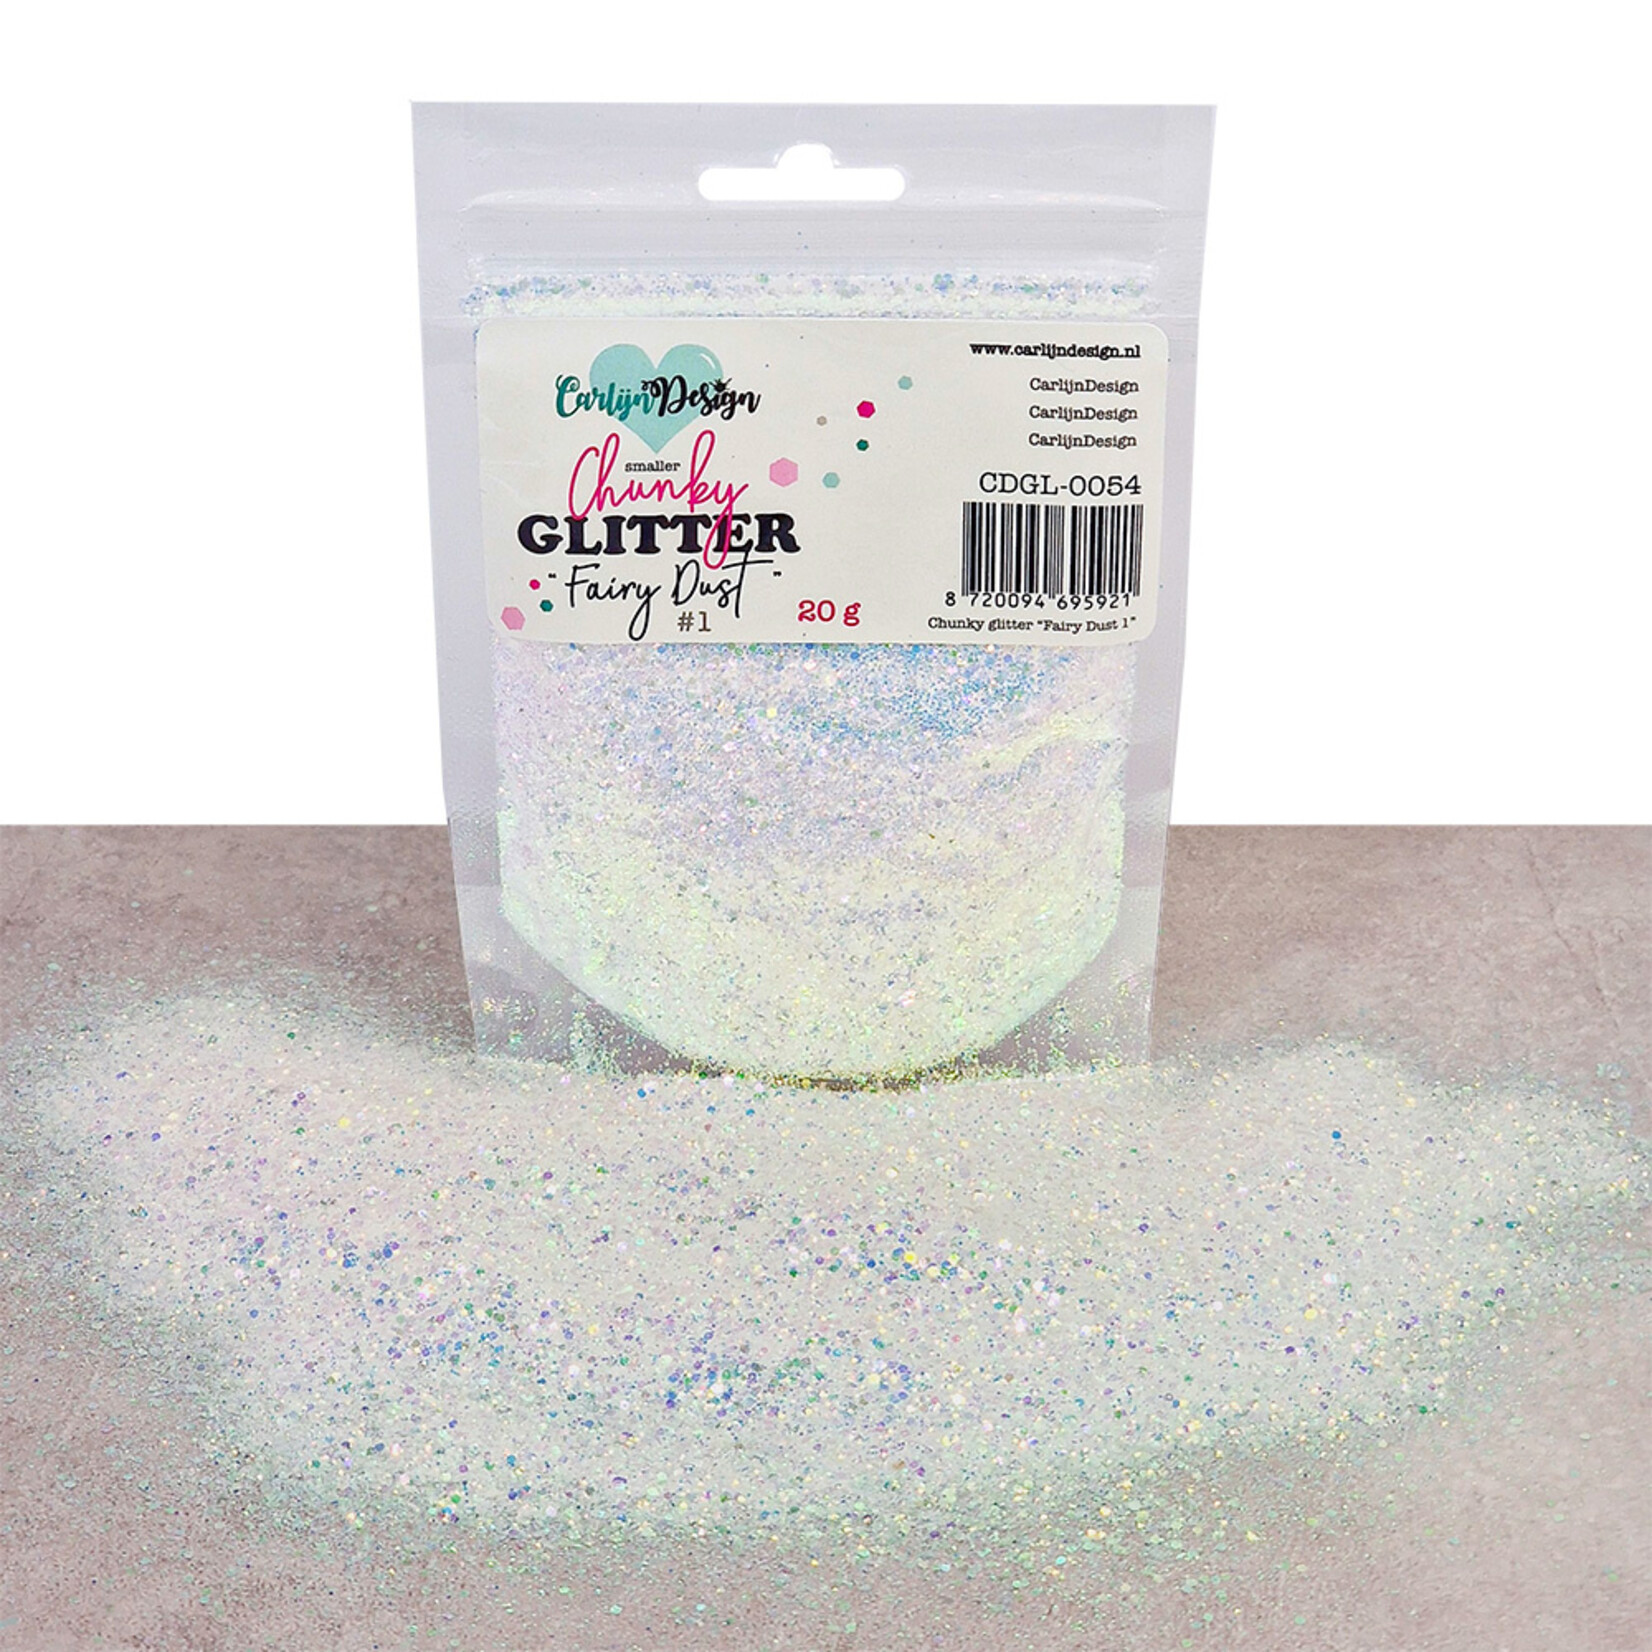 CarlijnDesign Chunky glitter Fairy Dust 1